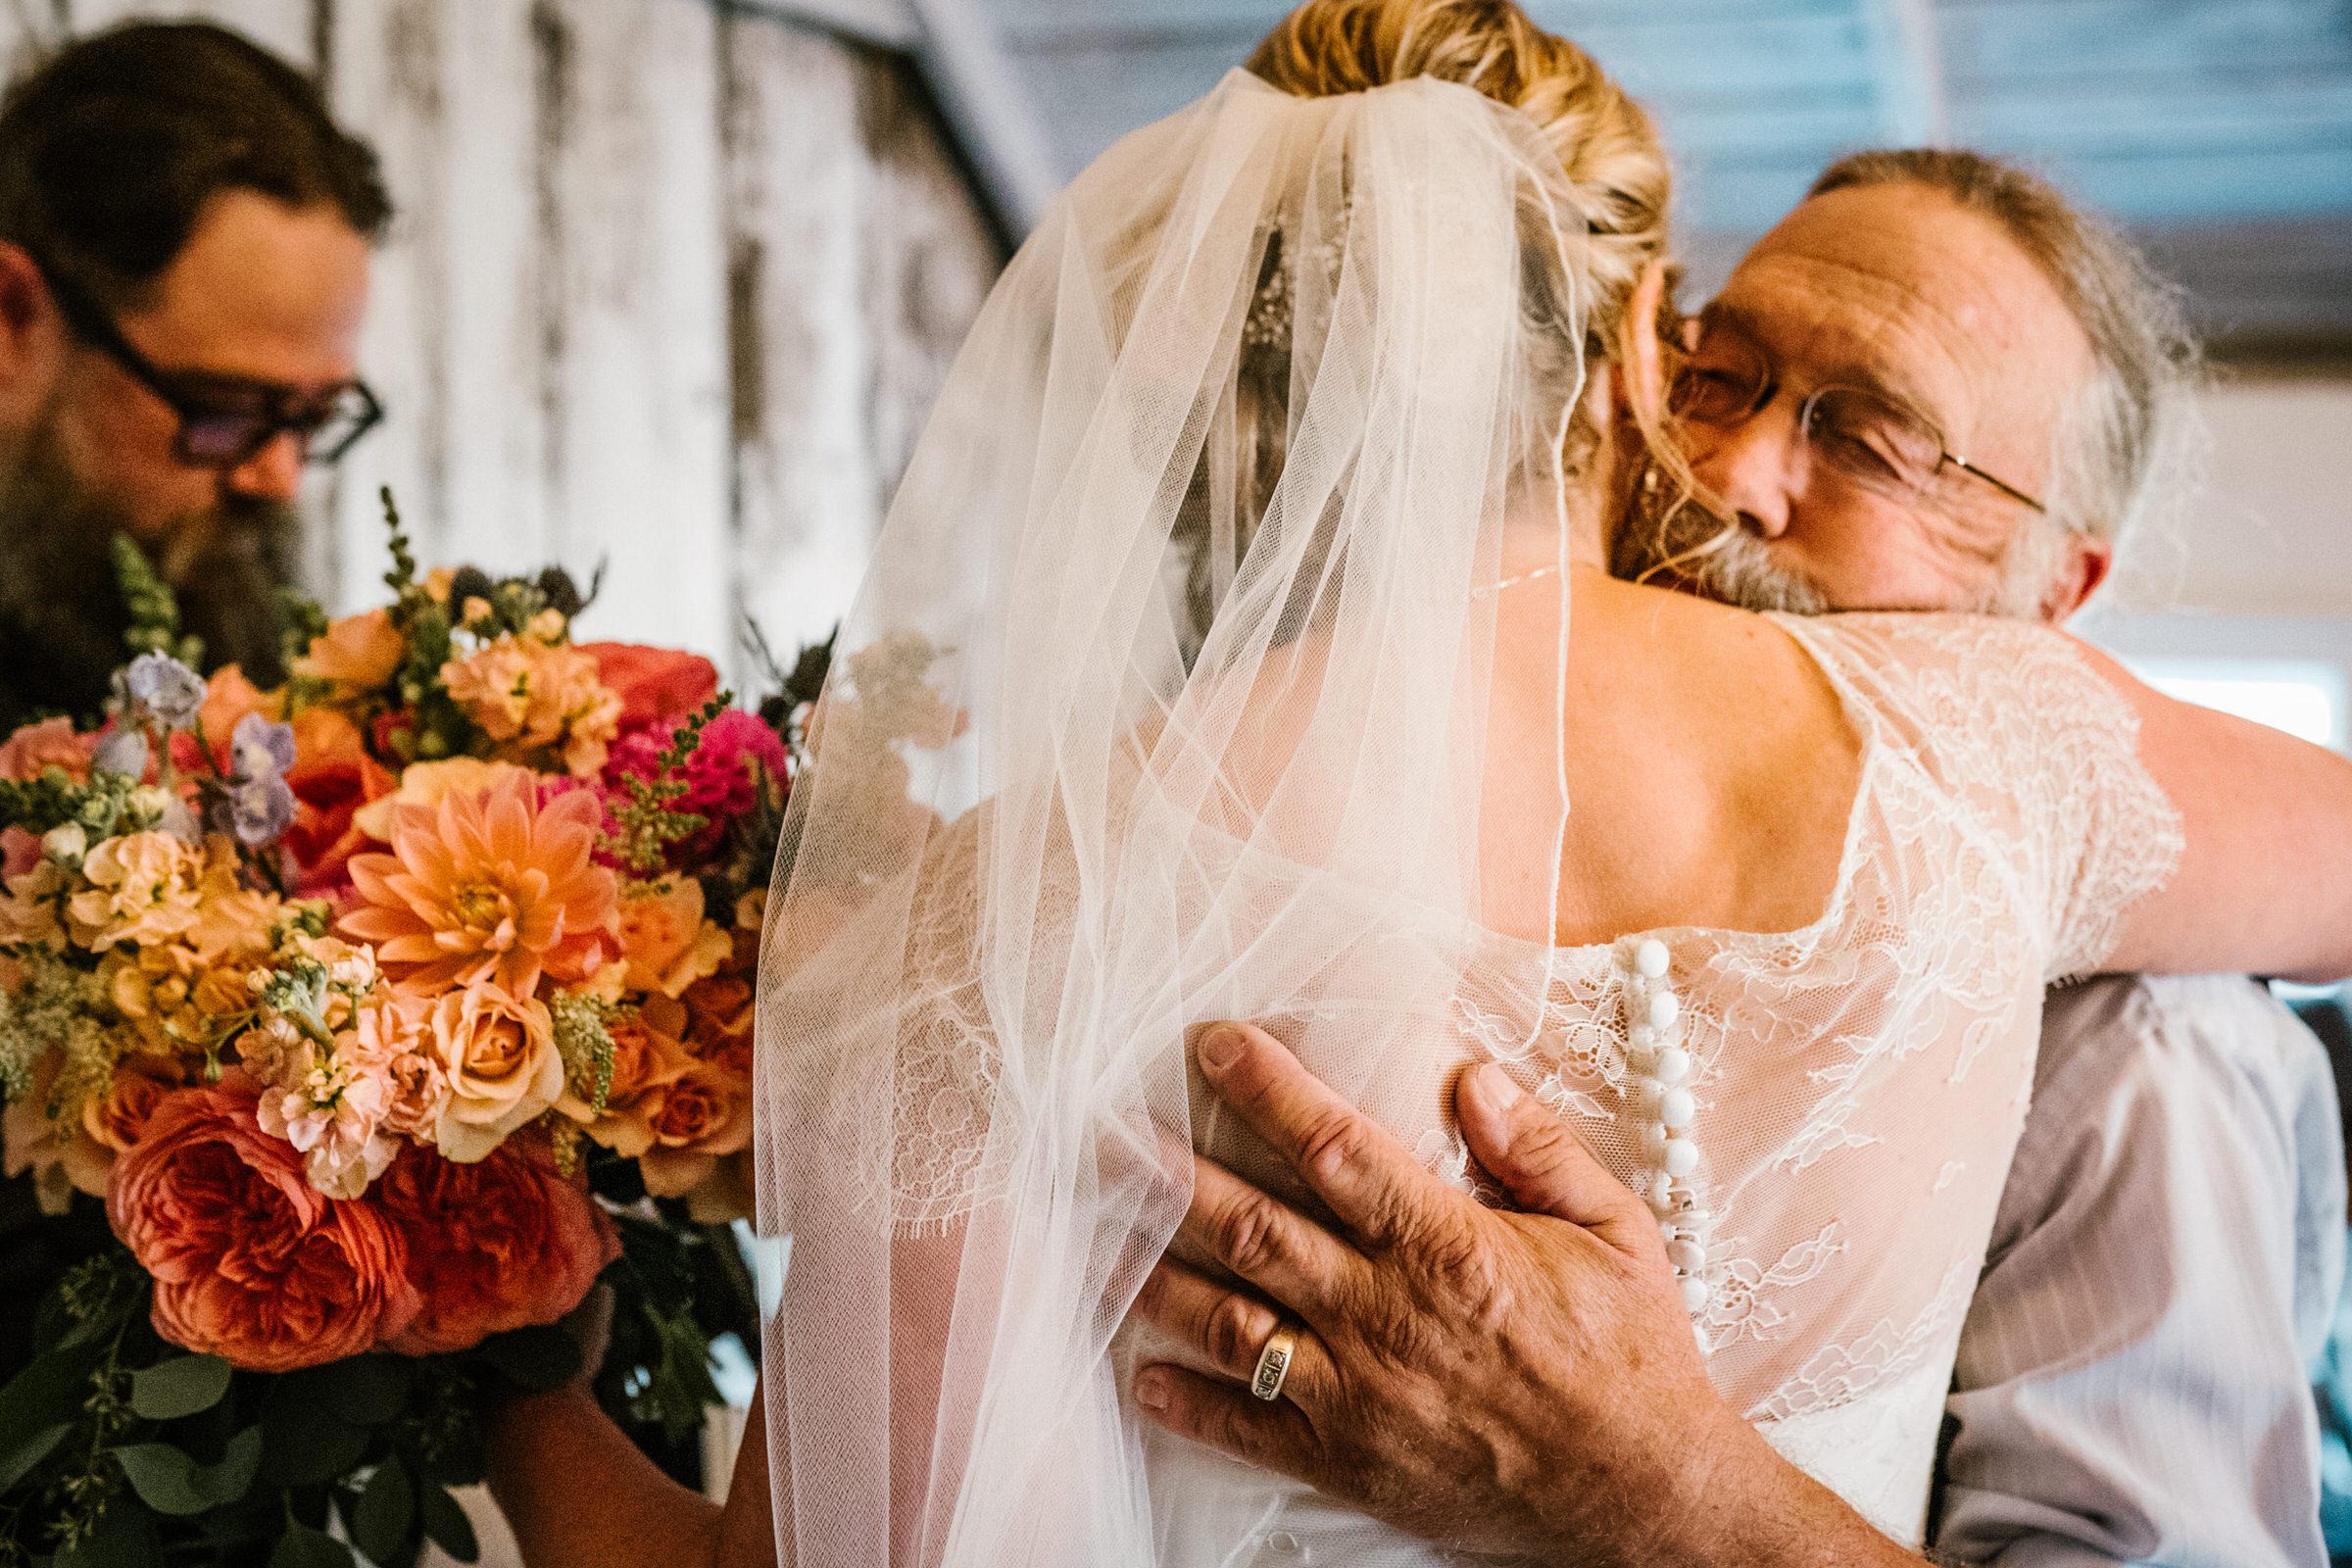 Wayfarer Whidbey Island Wedding: Sara hugs her dad